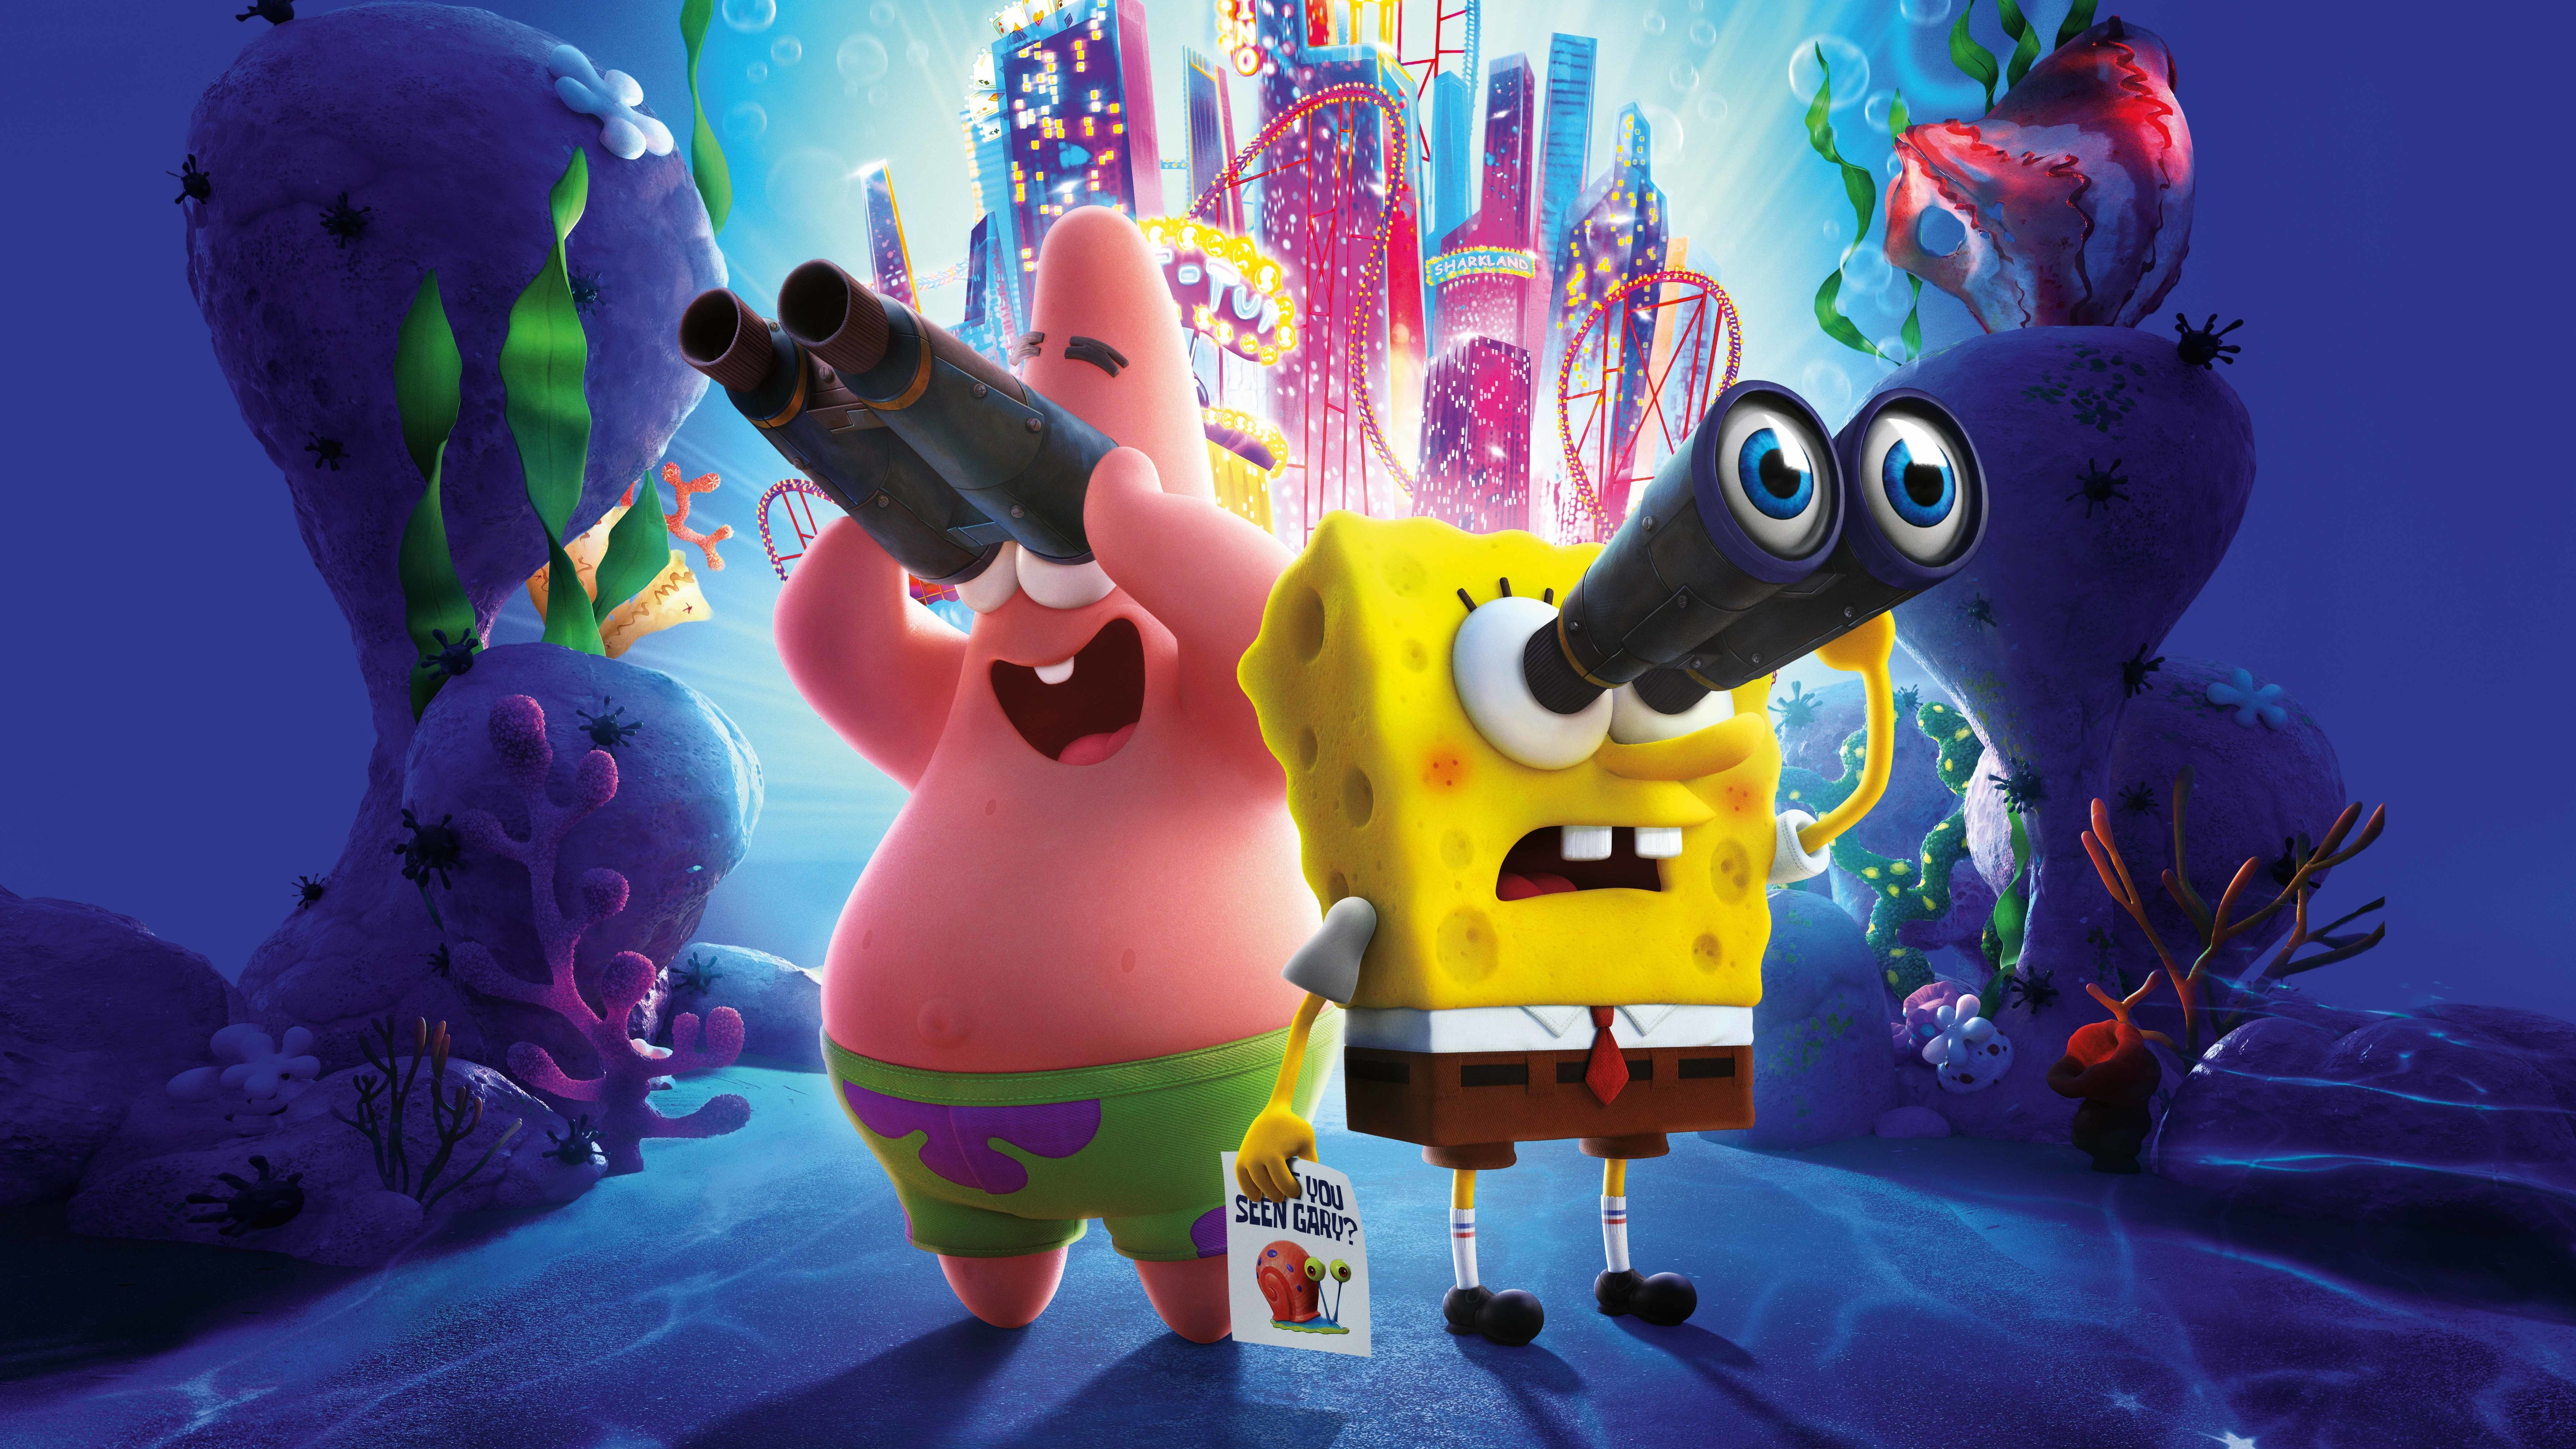 SpongeBob 2020 8K Wallpaper, HD Movies 4K Wallpaper, Image, Photo and Background